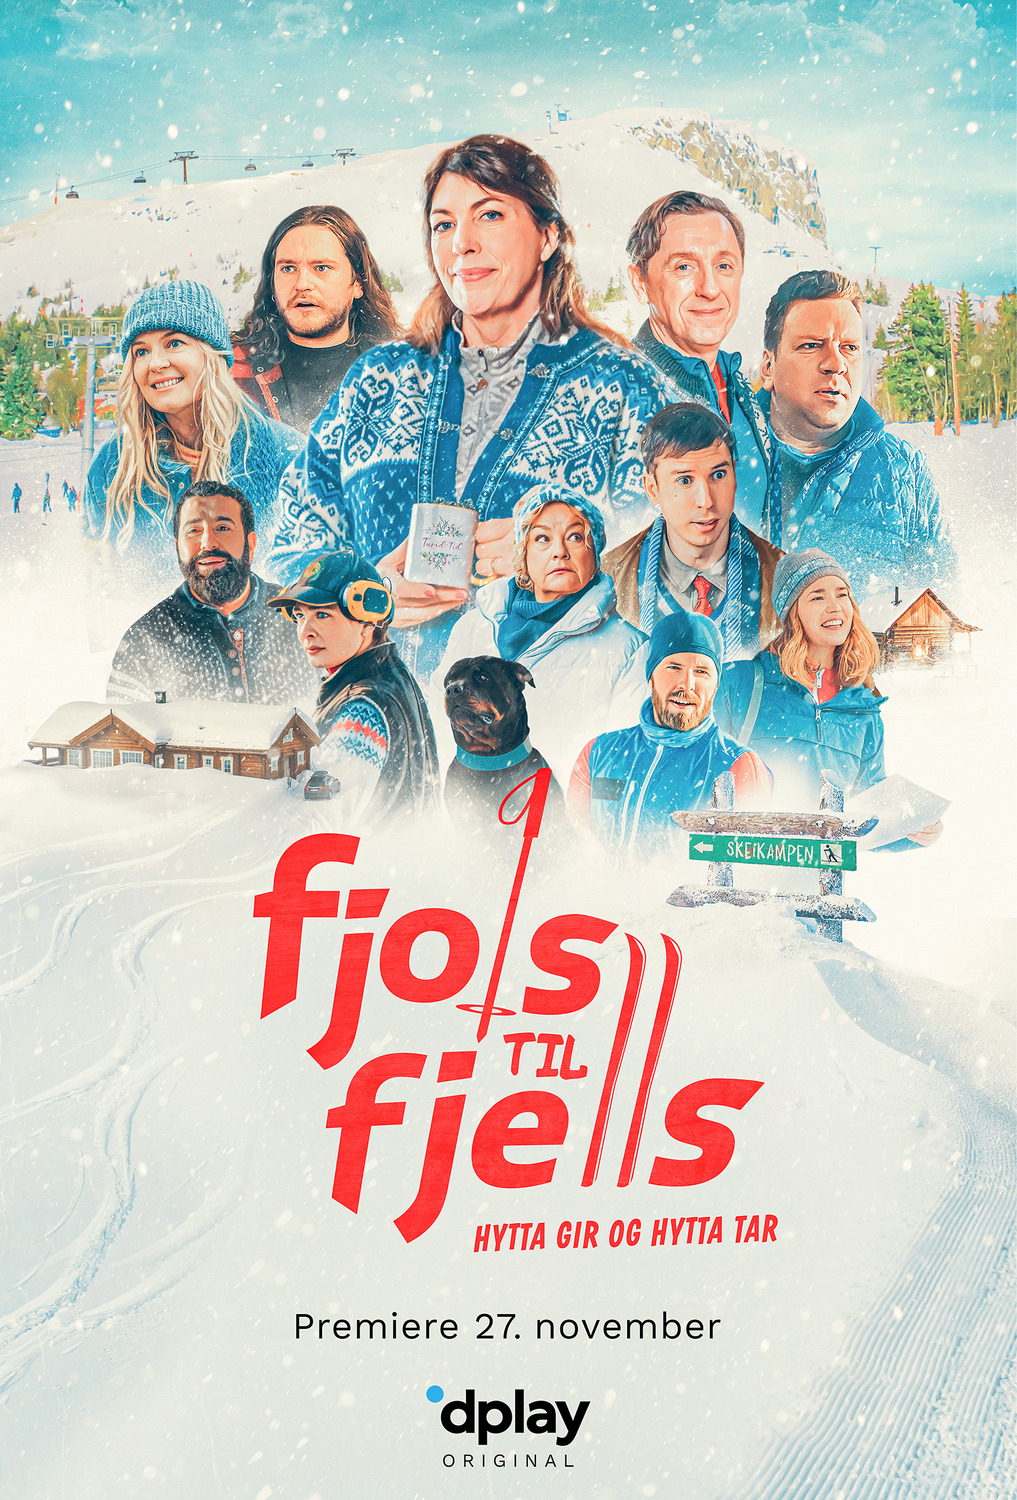 Extra Large TV Poster Image for Fjols til fjells 